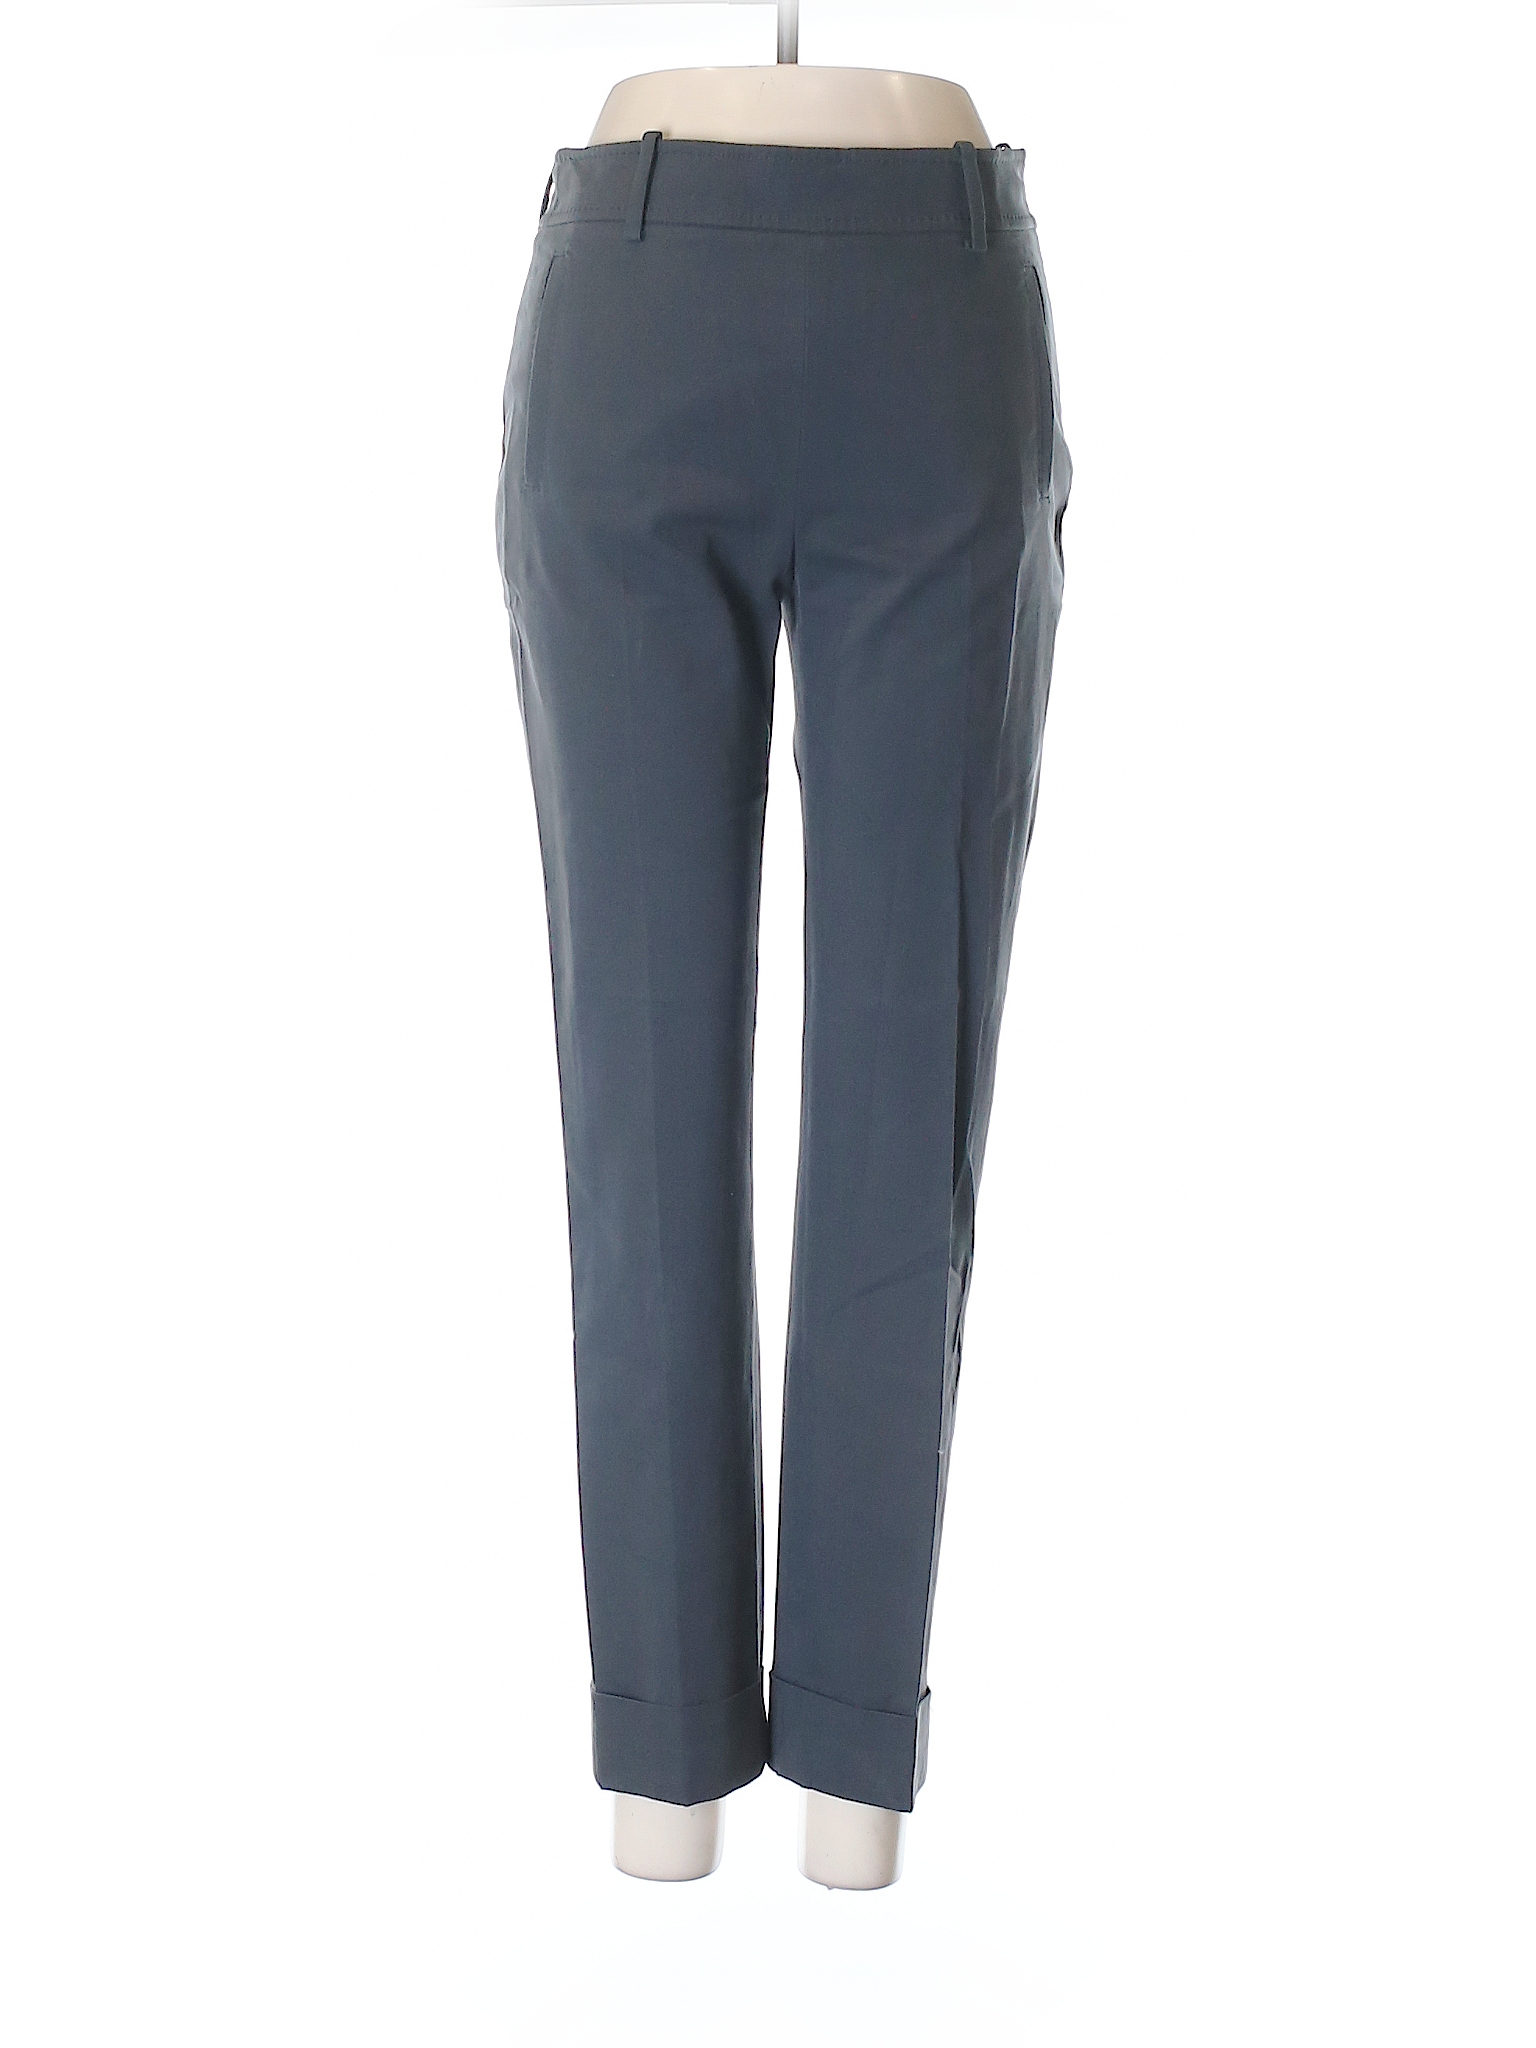 Loro Piana Solid Gray Dress Pants Size 40 (EU) - 90% off | thredUP